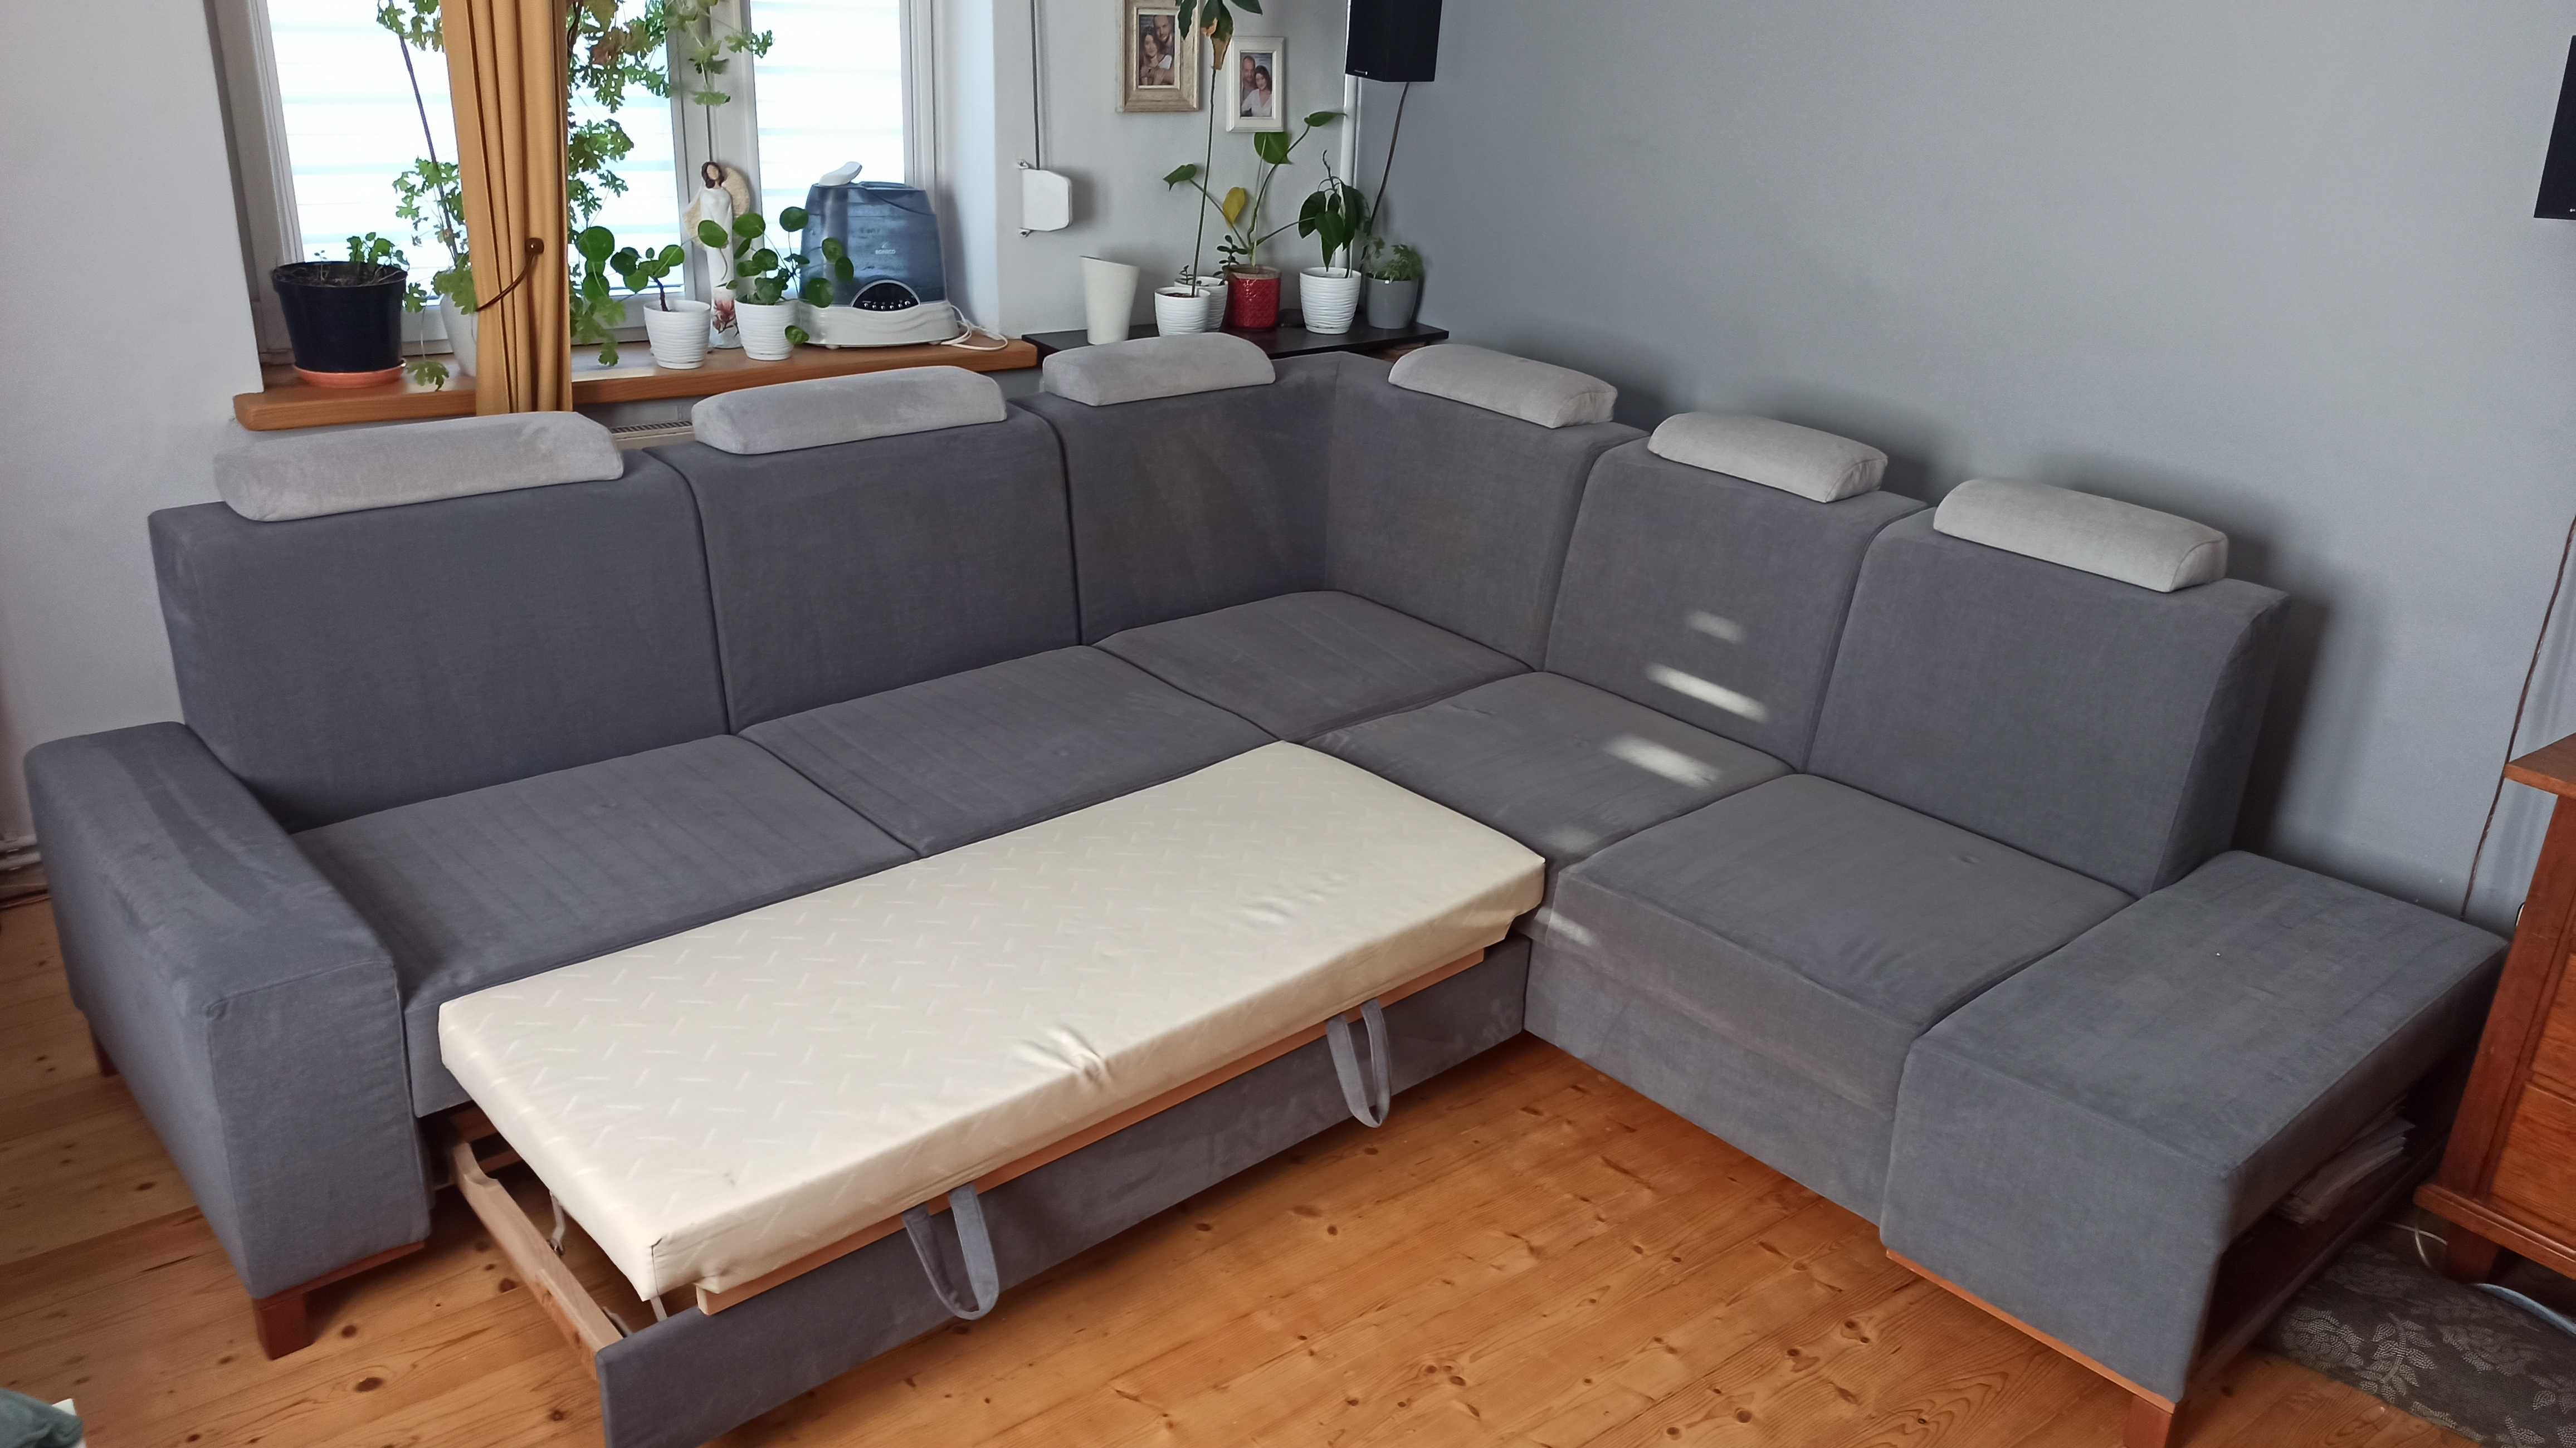 Klasa premium narożnik Unimebel 250x250 funkcja spania - rogówka sofa